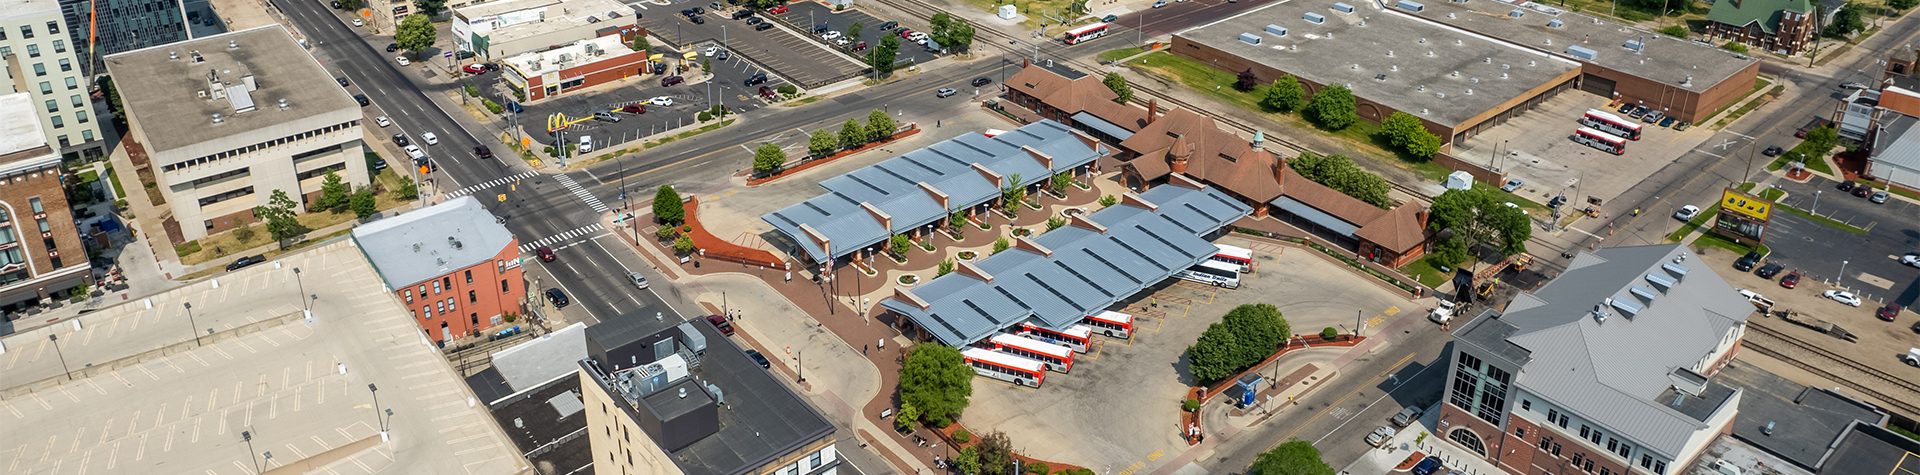 An aerial photograph of the Kalamazoo Transportation Center.